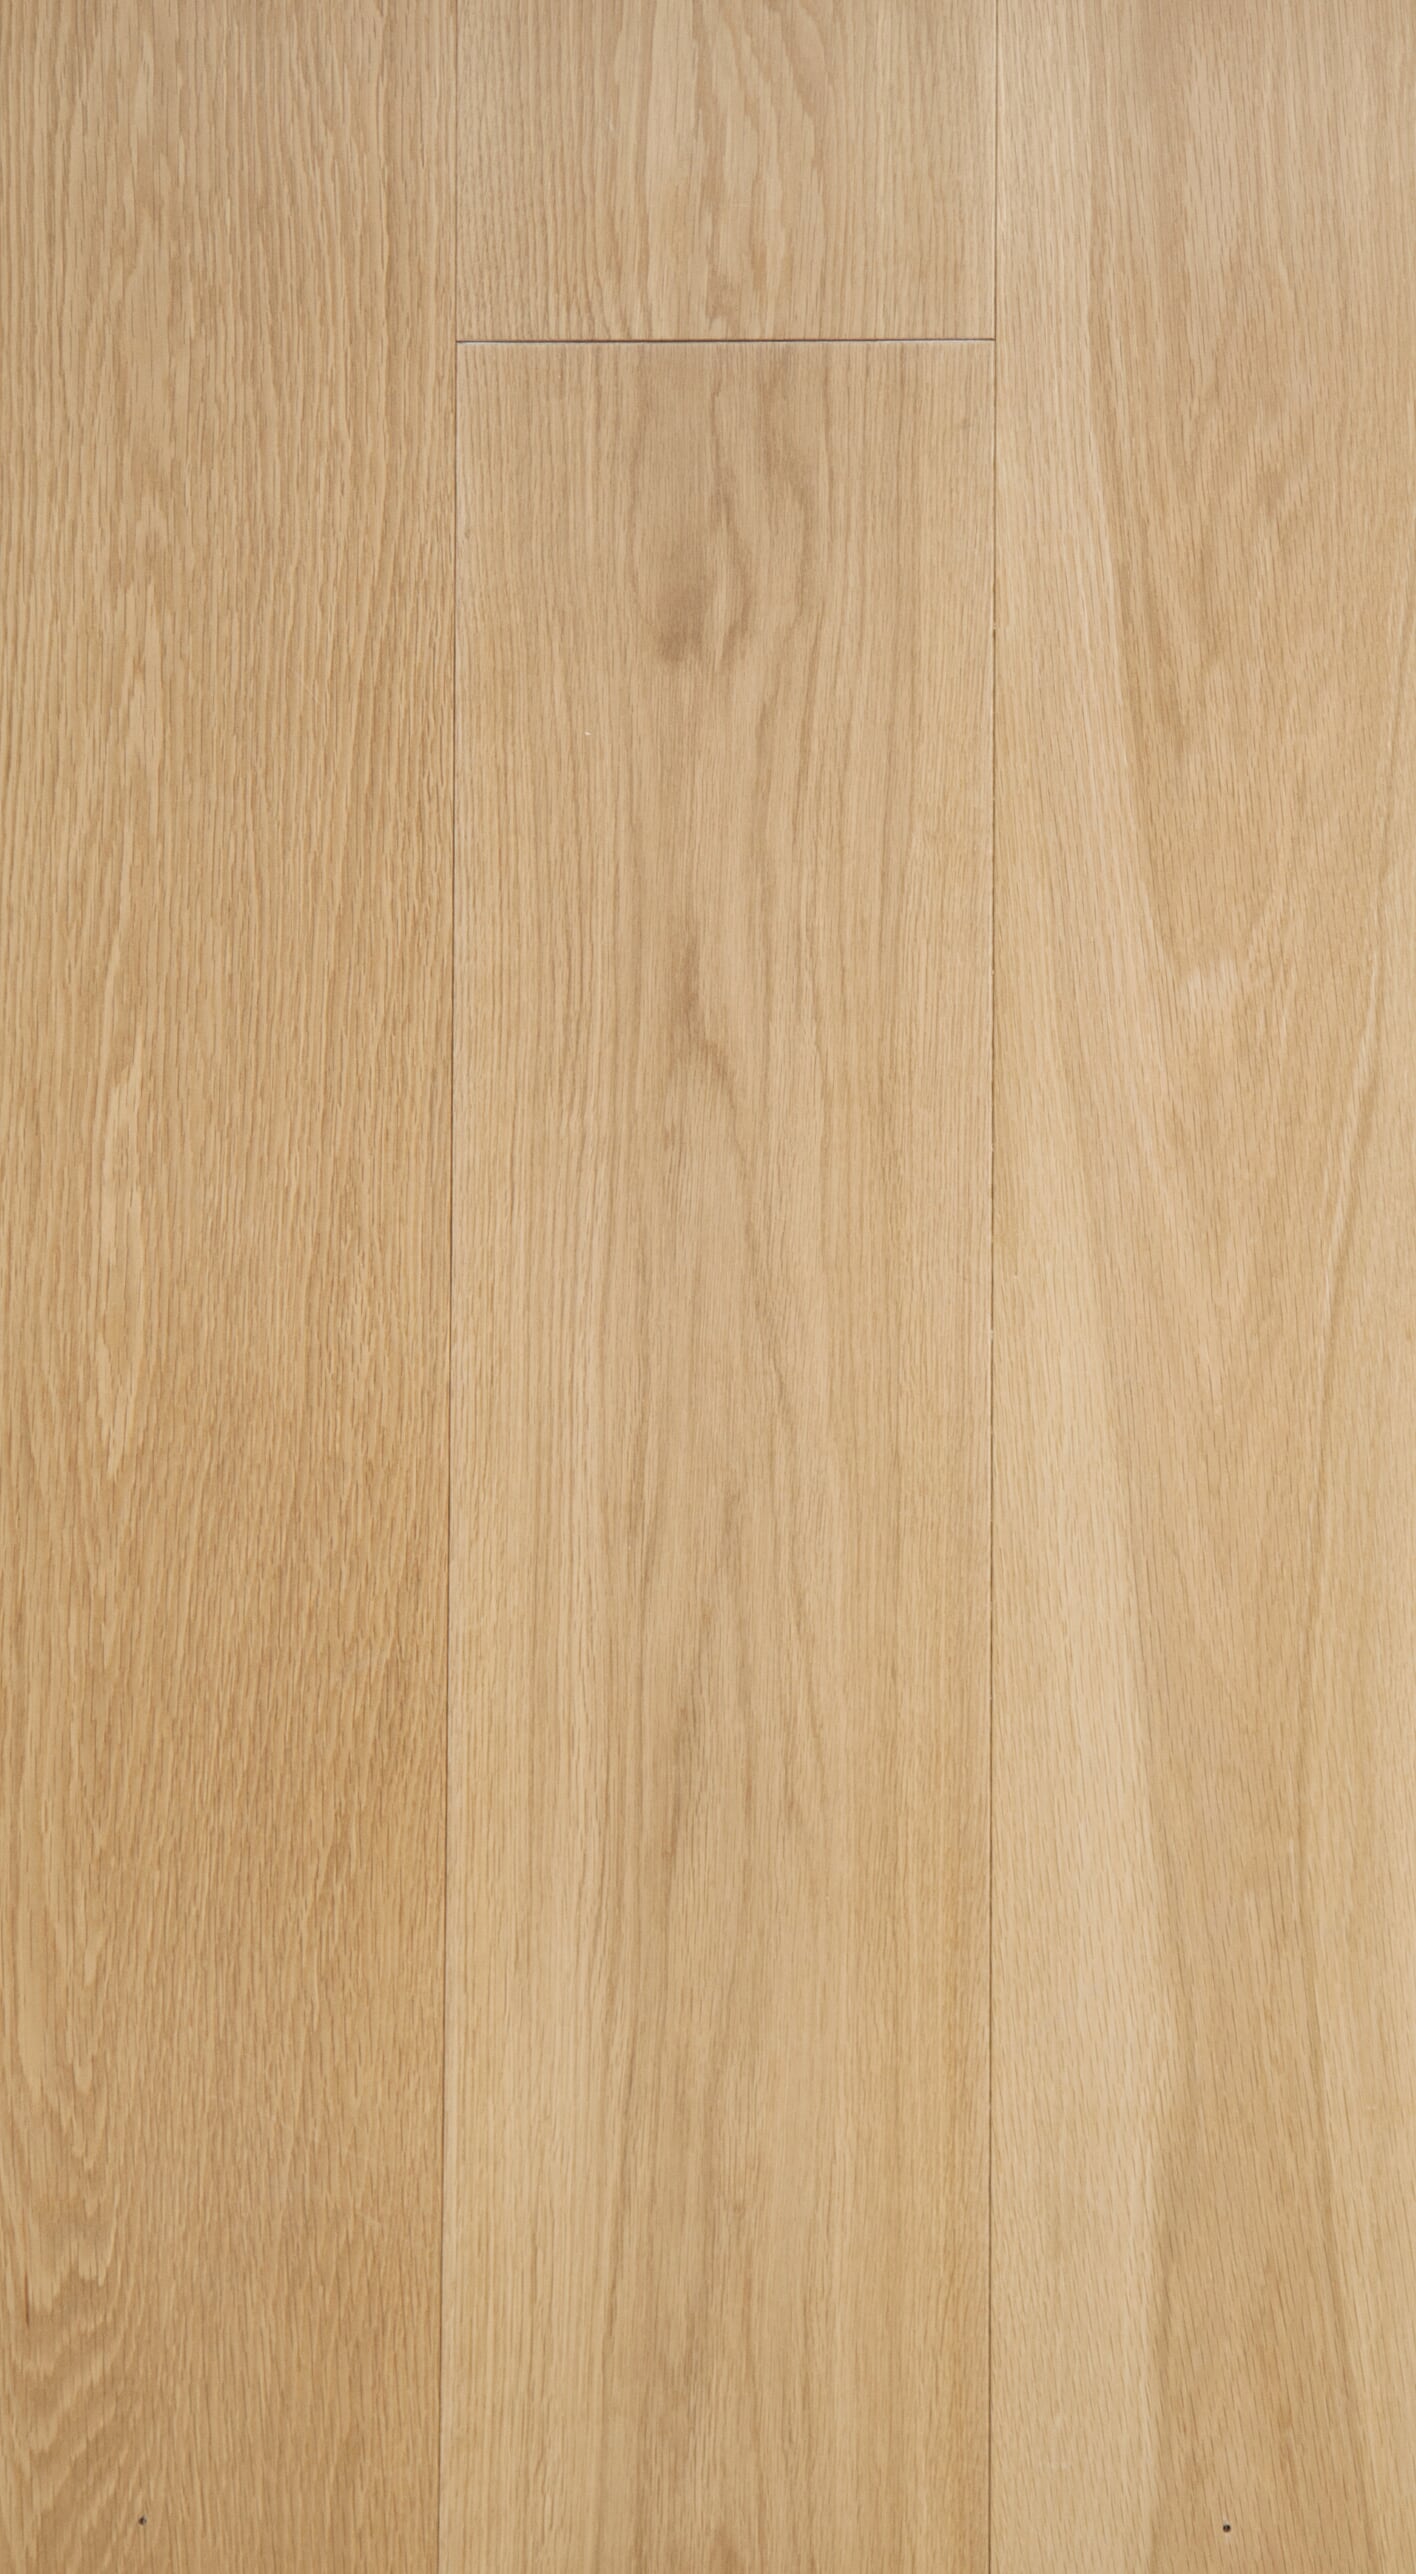 parquet engineered wood flooring